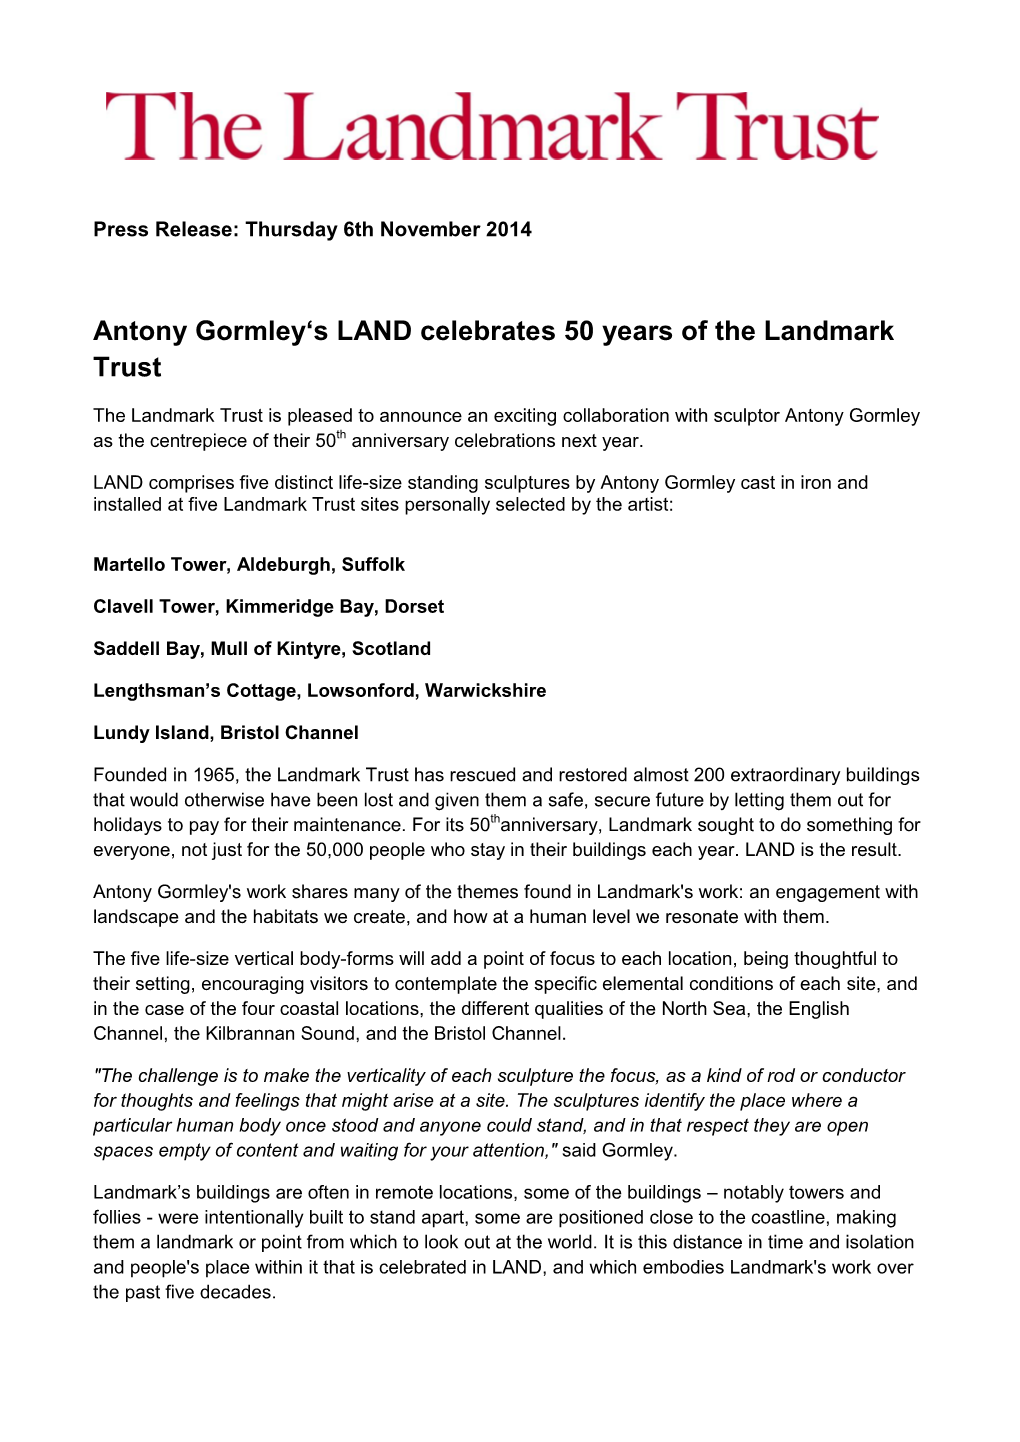 Antony Gormley's LAND Celebrates 50 Years of the Landmark Trust